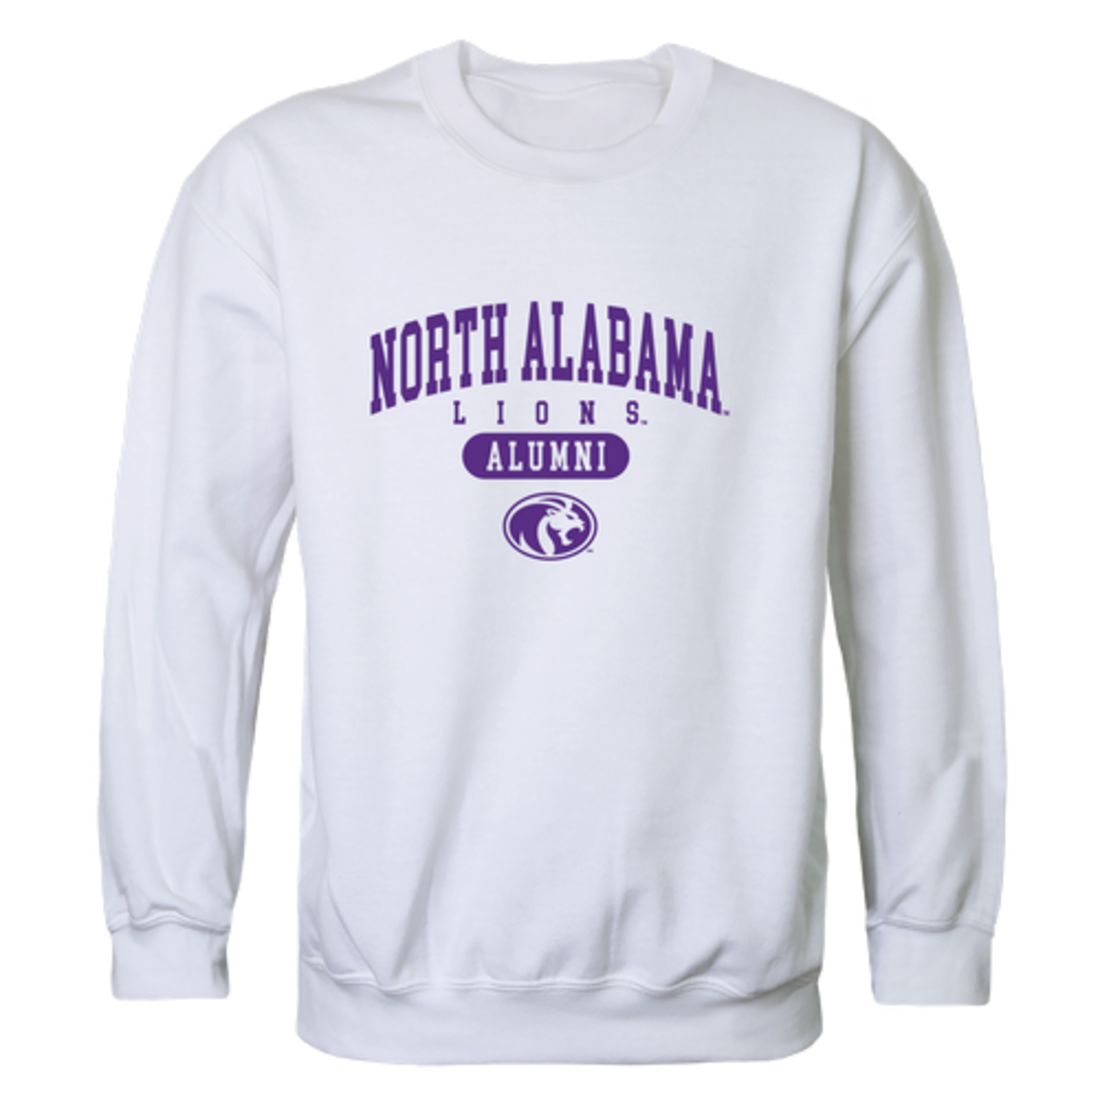 North Alabama Lions Alumni Crewneck Sweatshirt